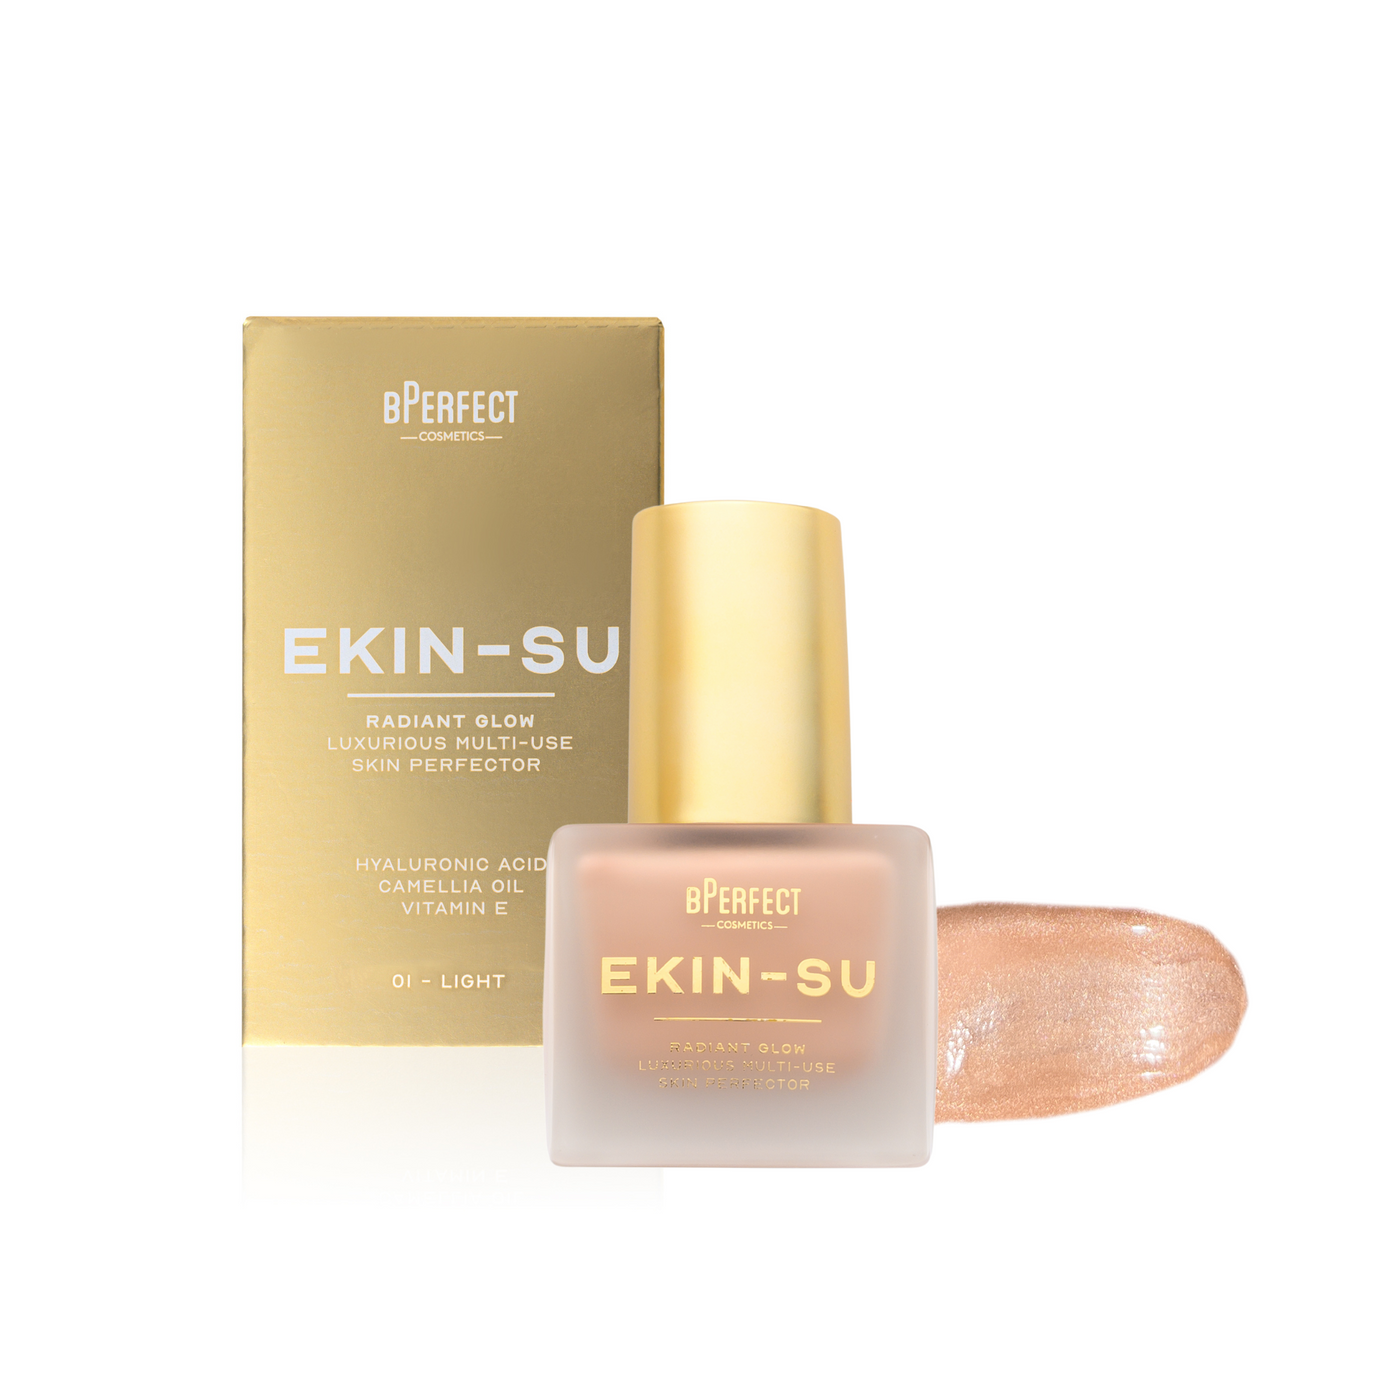 BPerfect x Ekin-Su - Radiant Glow Skin Perfector Artist Bundle